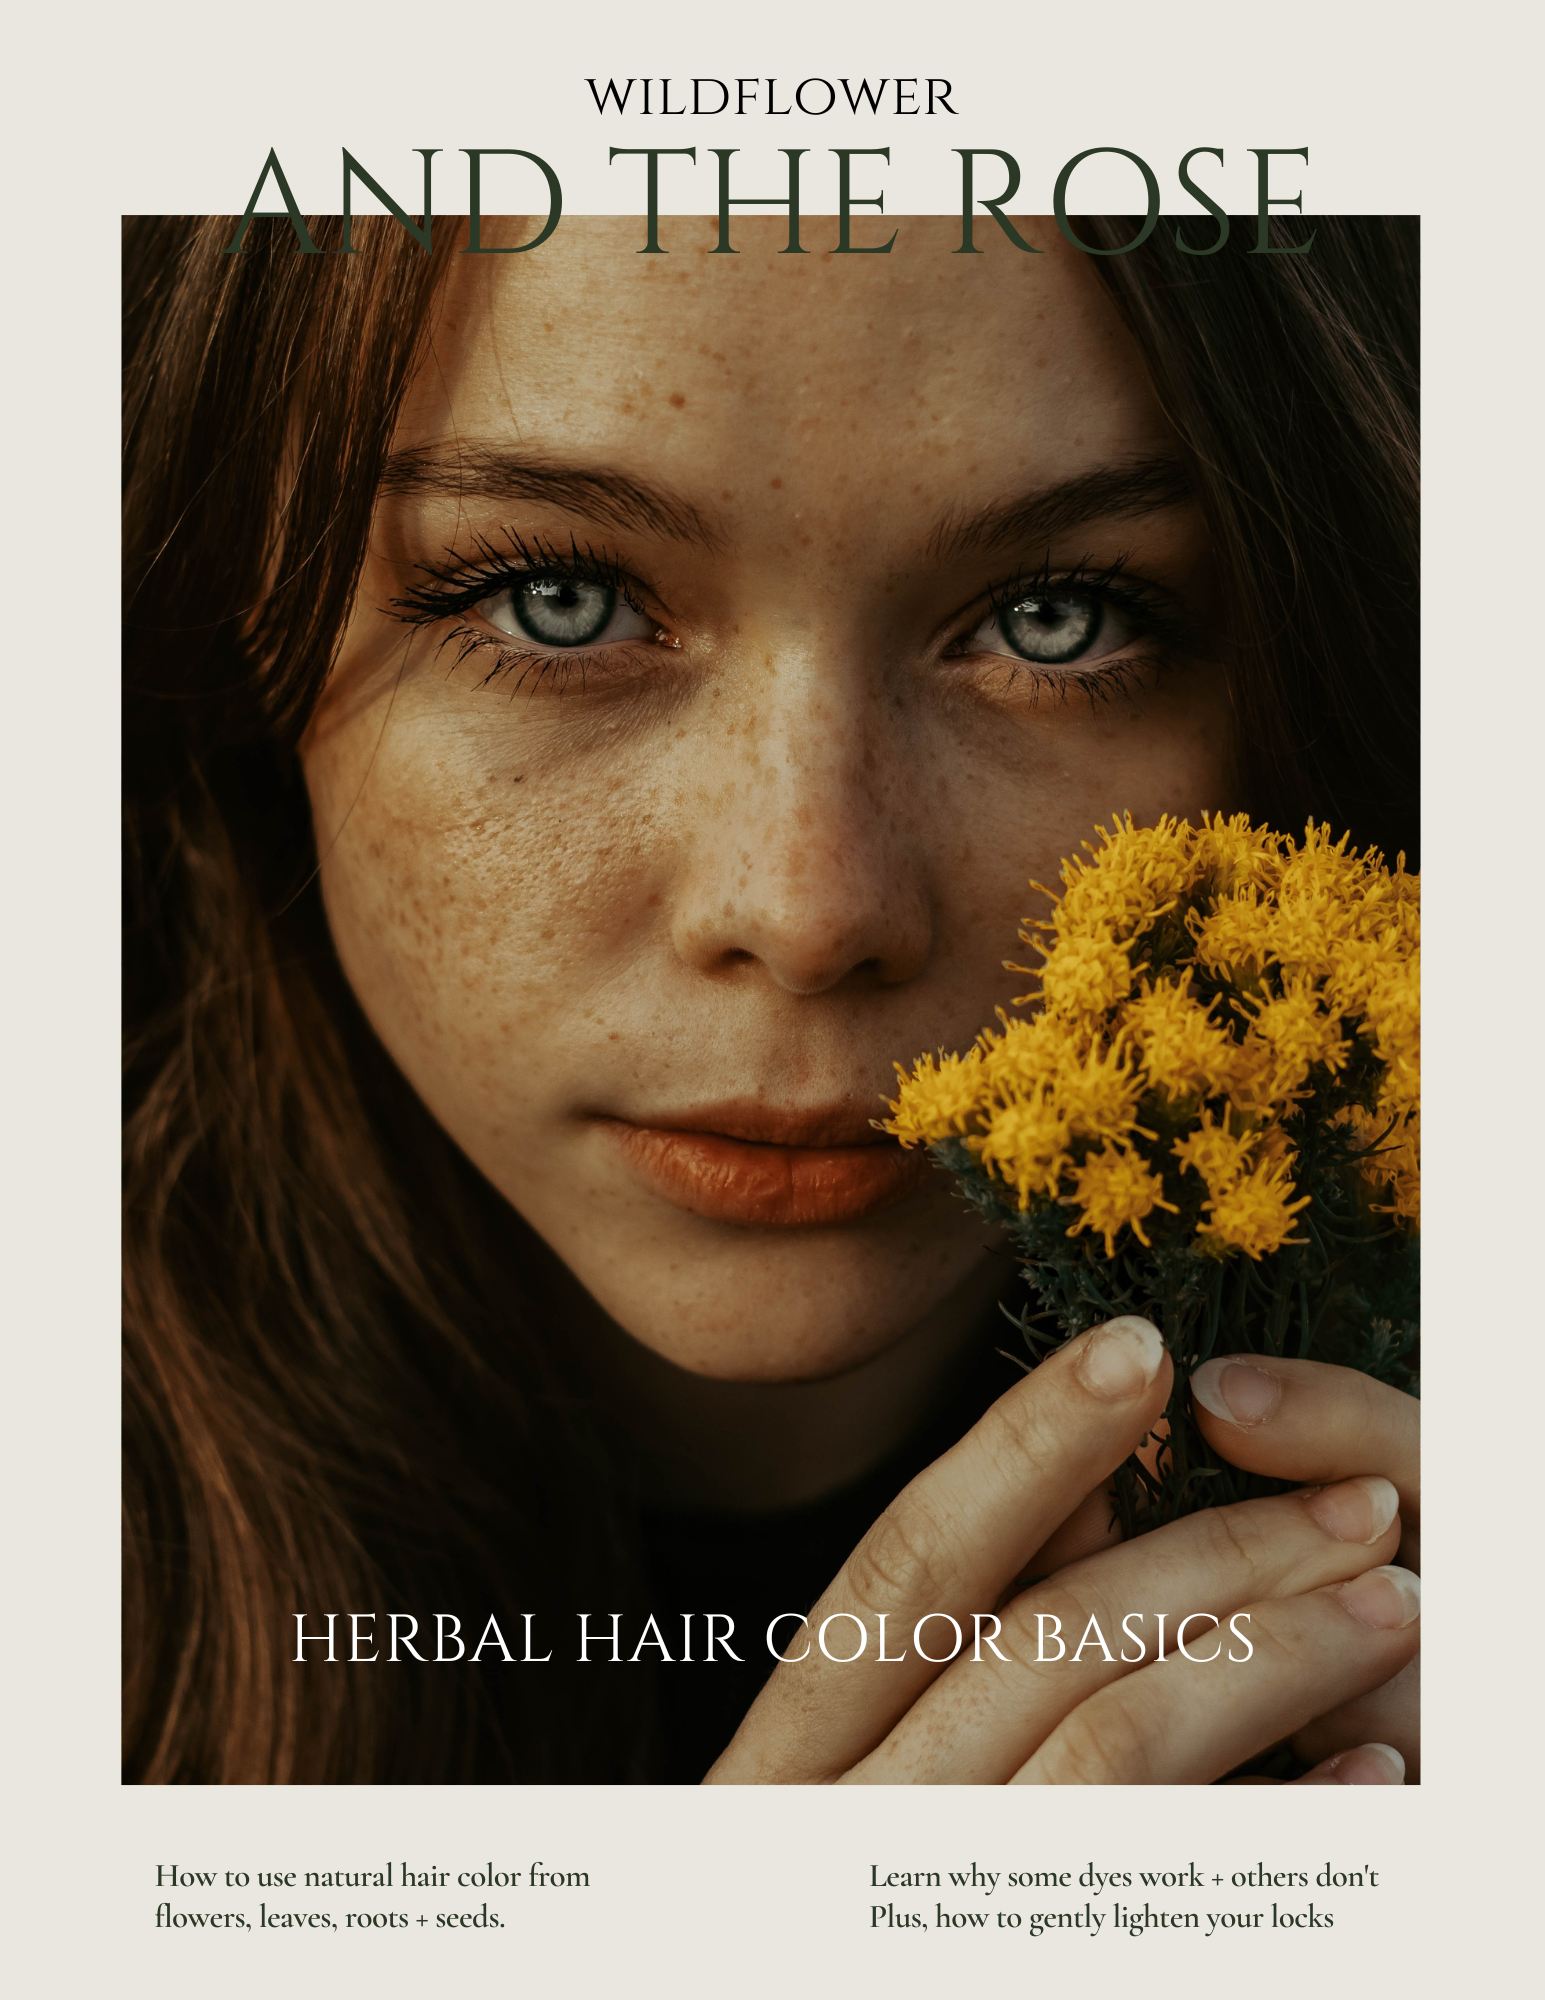 Herbal Hair Color Basics Guide